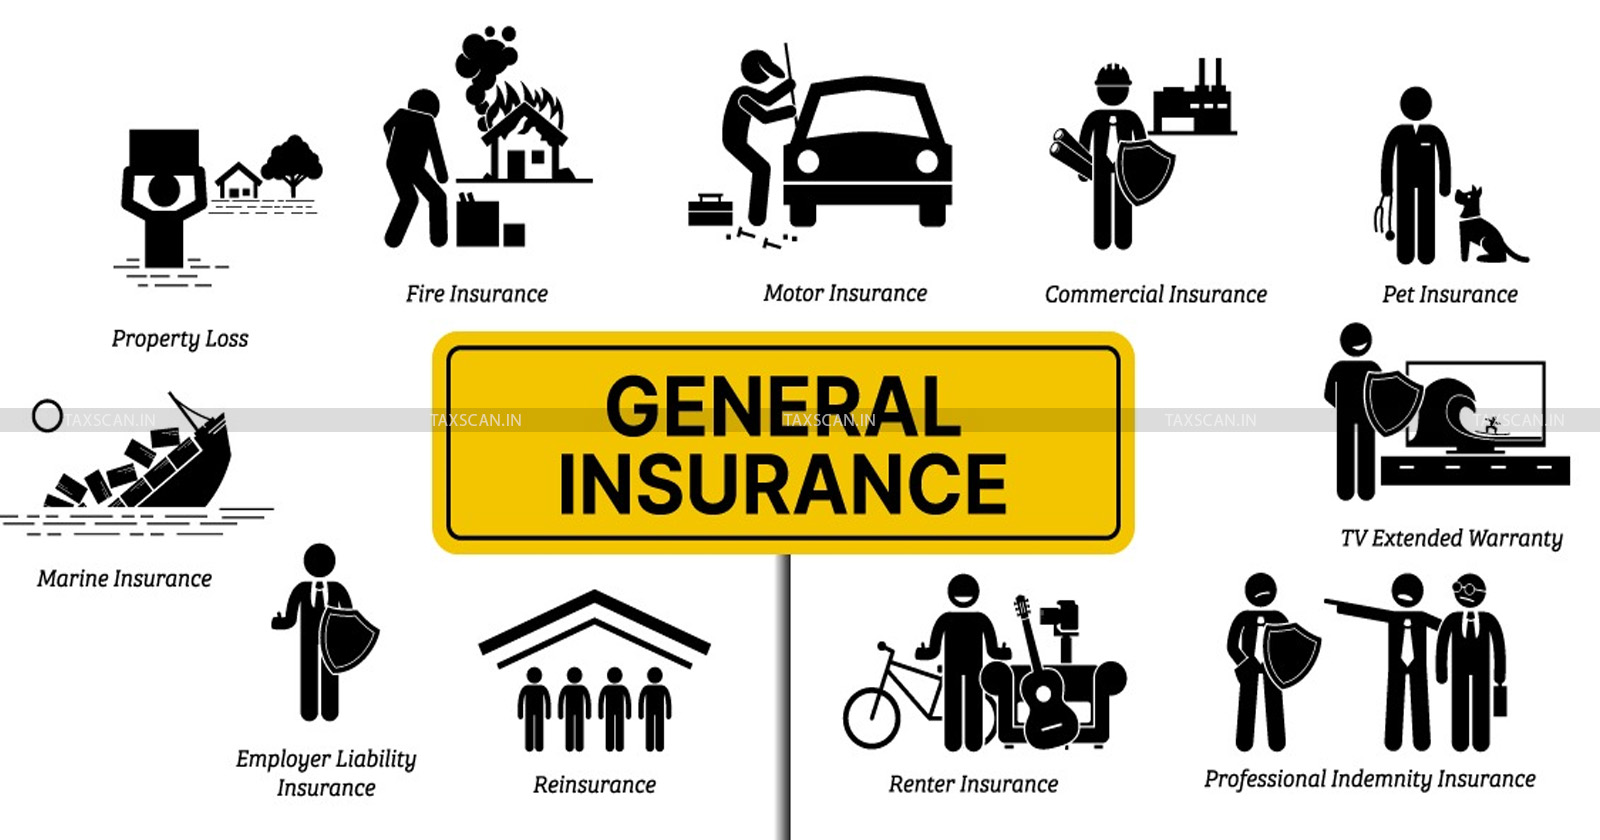 Service tax - General insurance service - Cenvat credit - CESTAT - CESTAT Ahmedabad - Service Tax paid on General Insurance - Service Tax on General Insurance Cenvat Credit - TAXSCAN